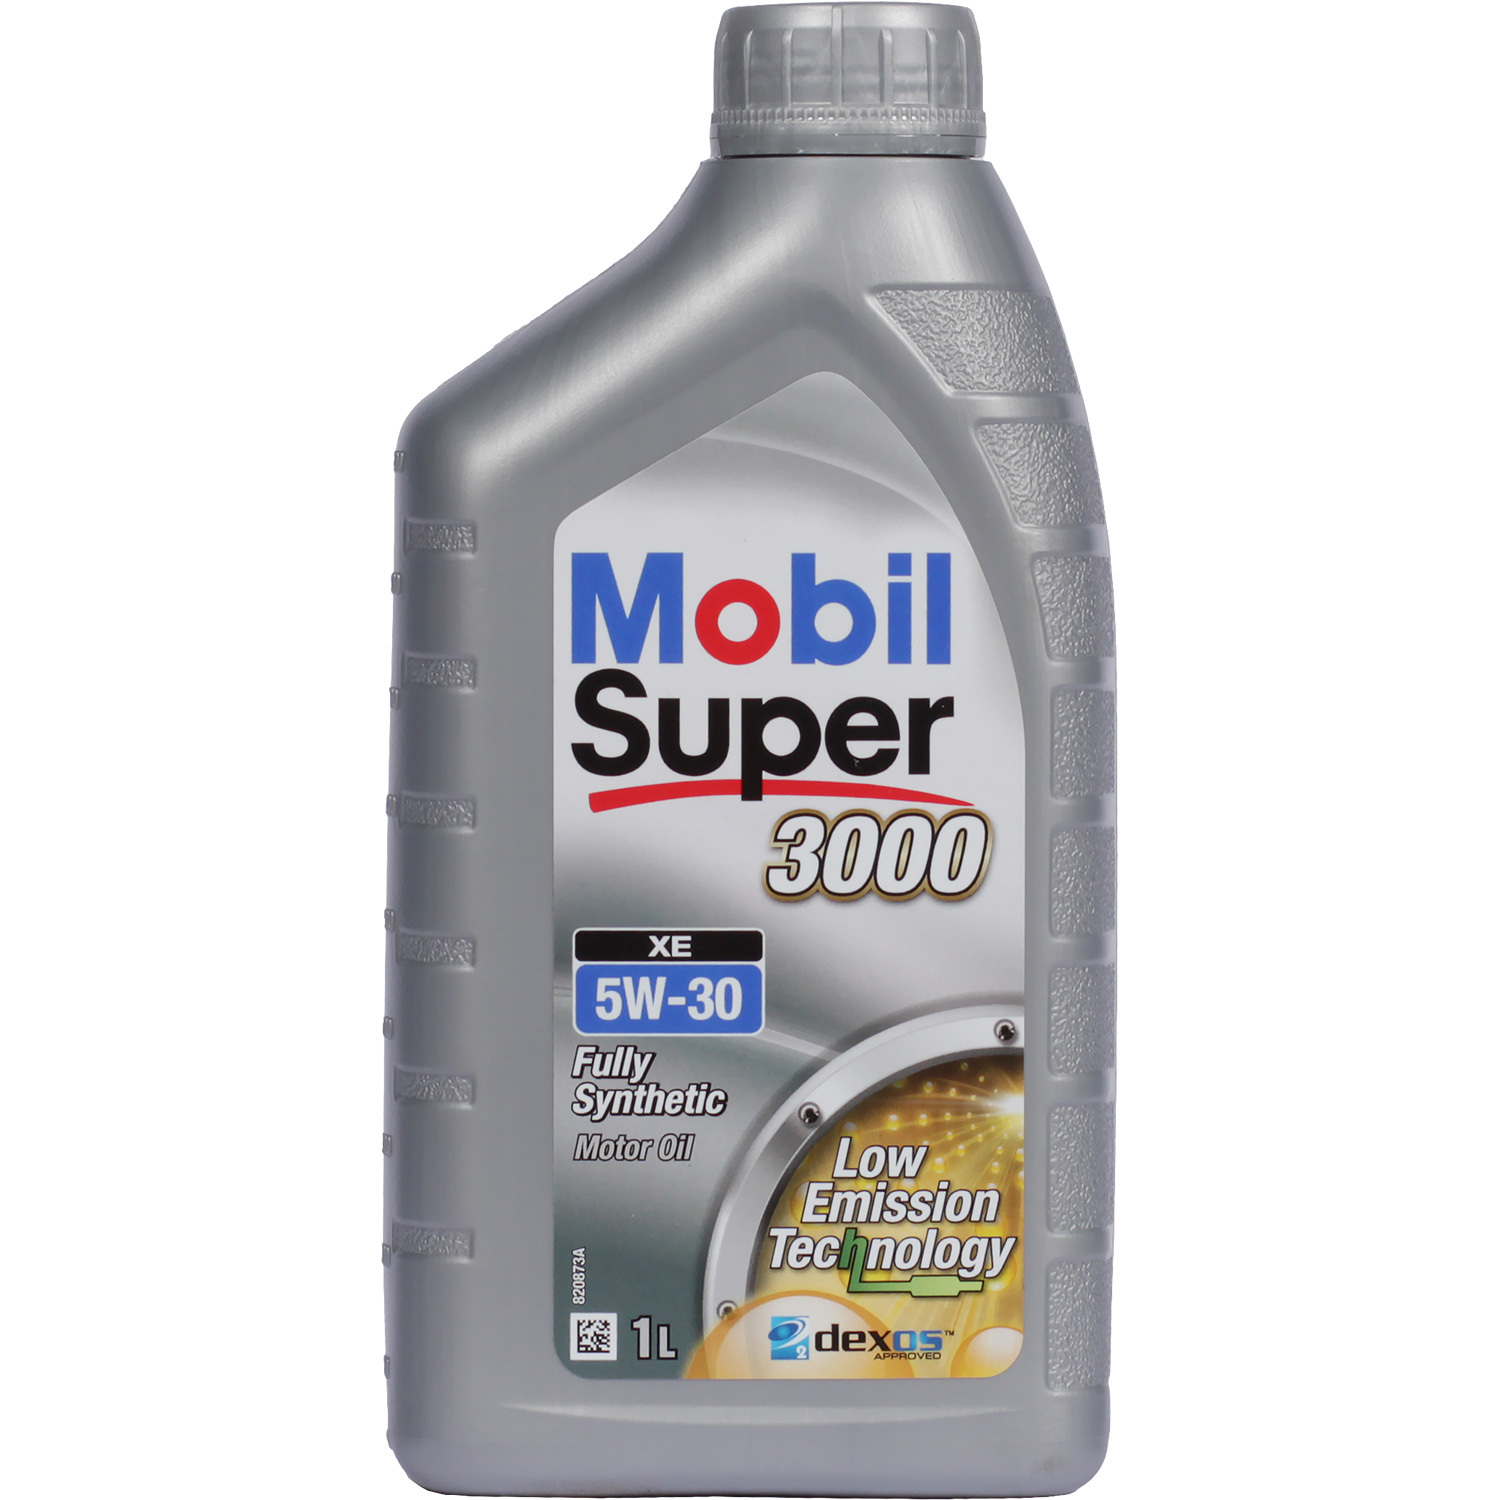 Моторное масло Mobil Super 3000 XE 5W-30, 1 л - фото 1